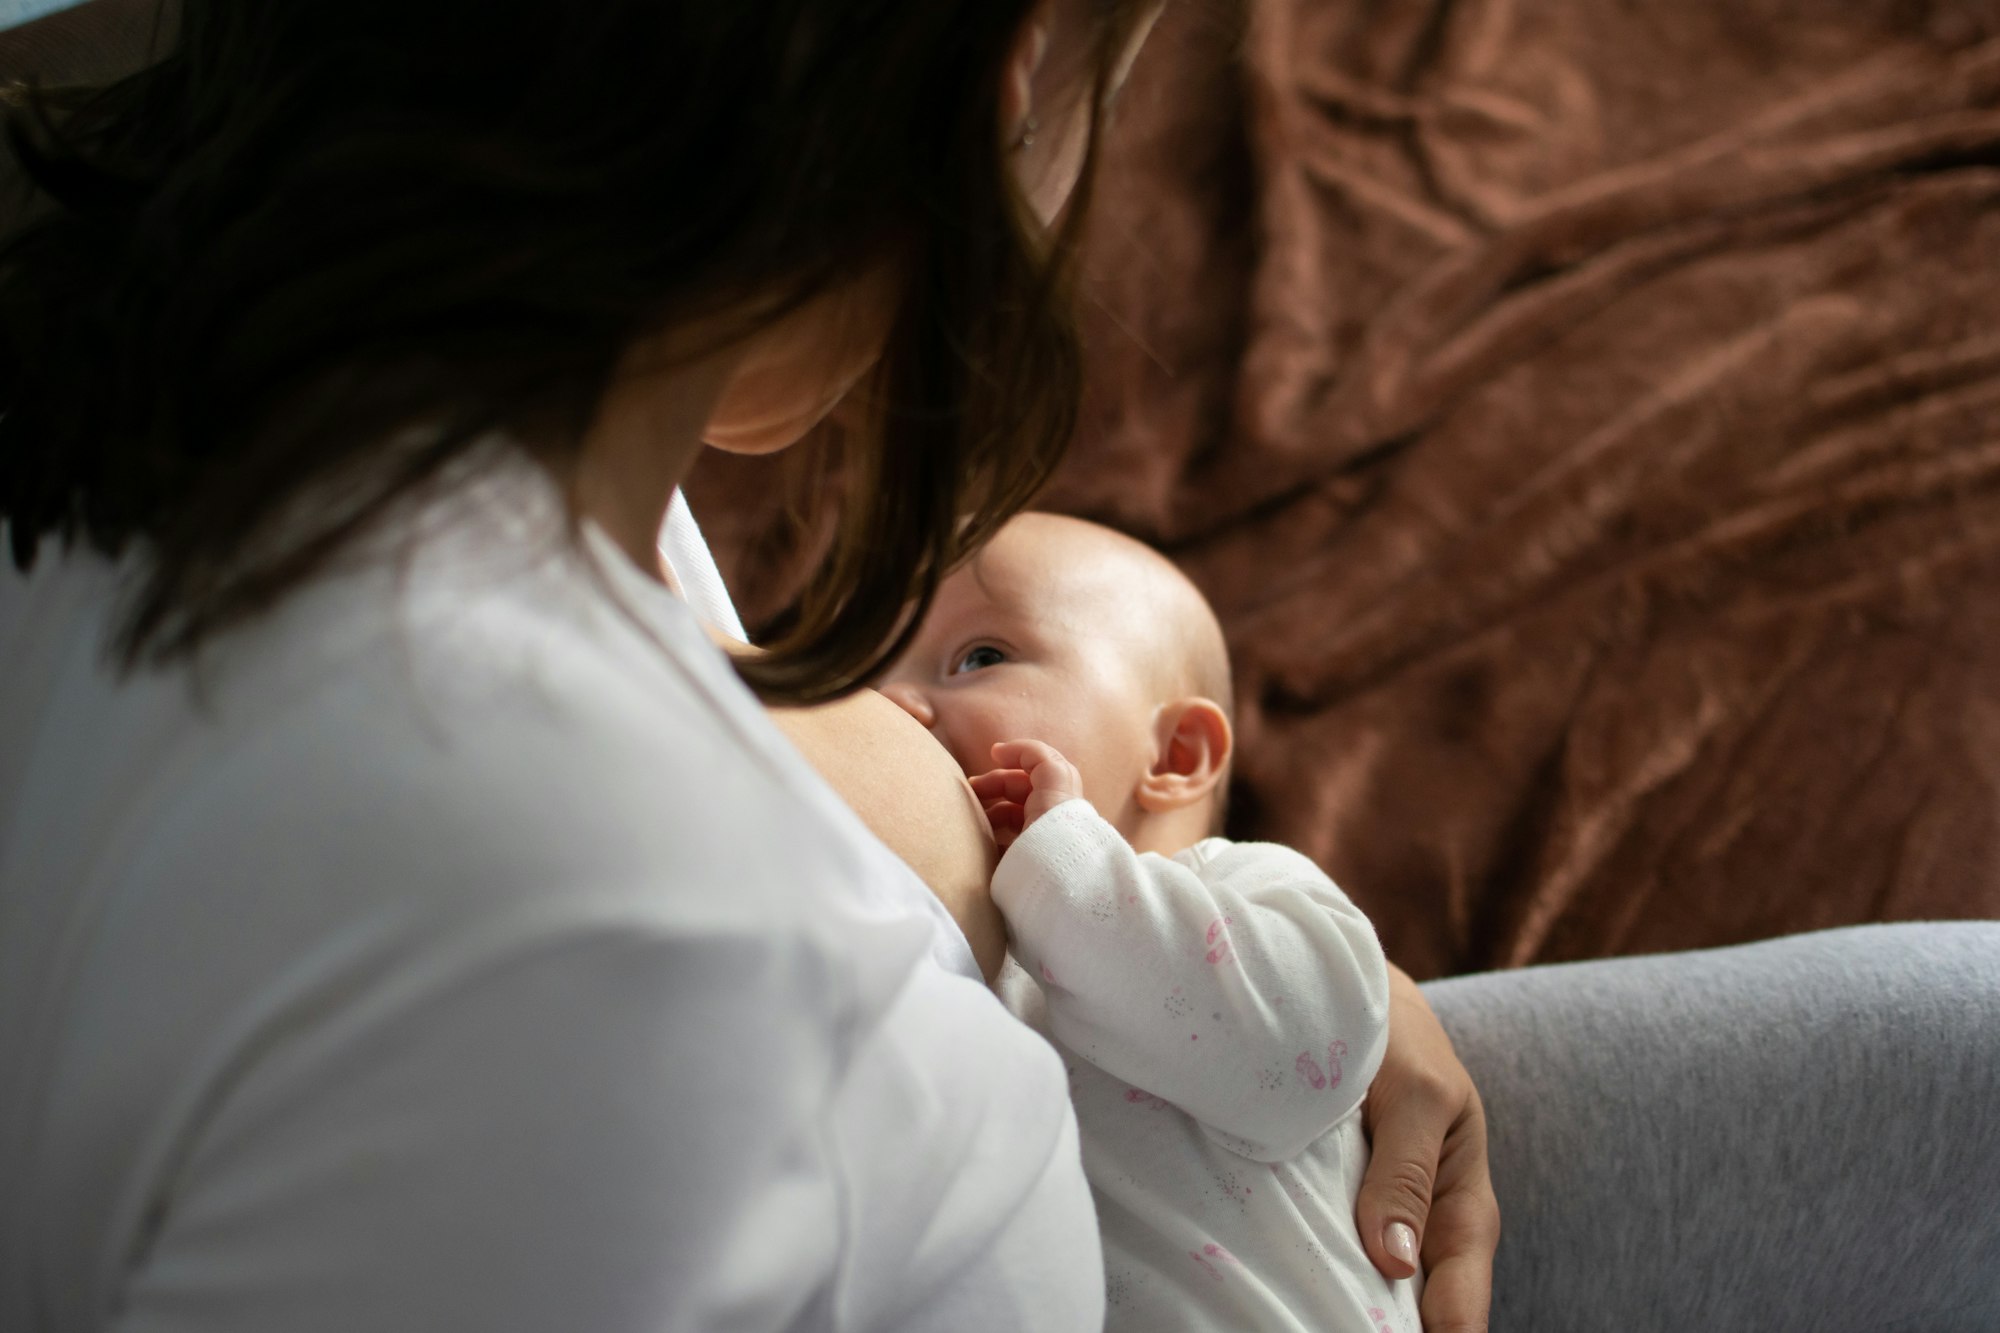 Covid vaccine and breastfeeding. Pregnancy, breastfeeding, fertility and coronavirus. Baby eating